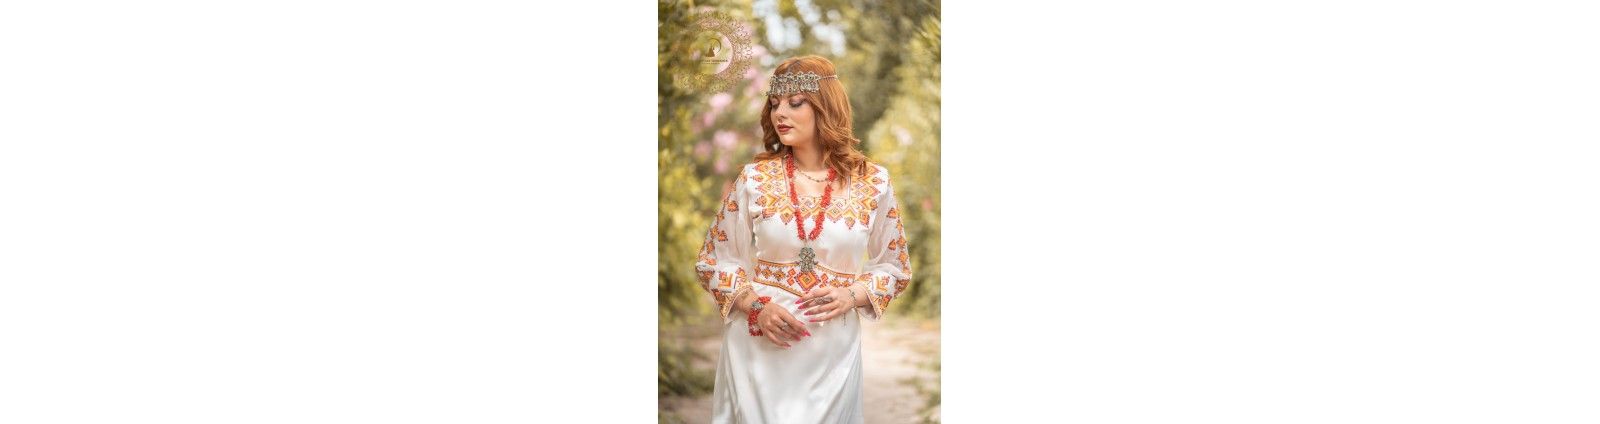 Kabyle dress ceremony